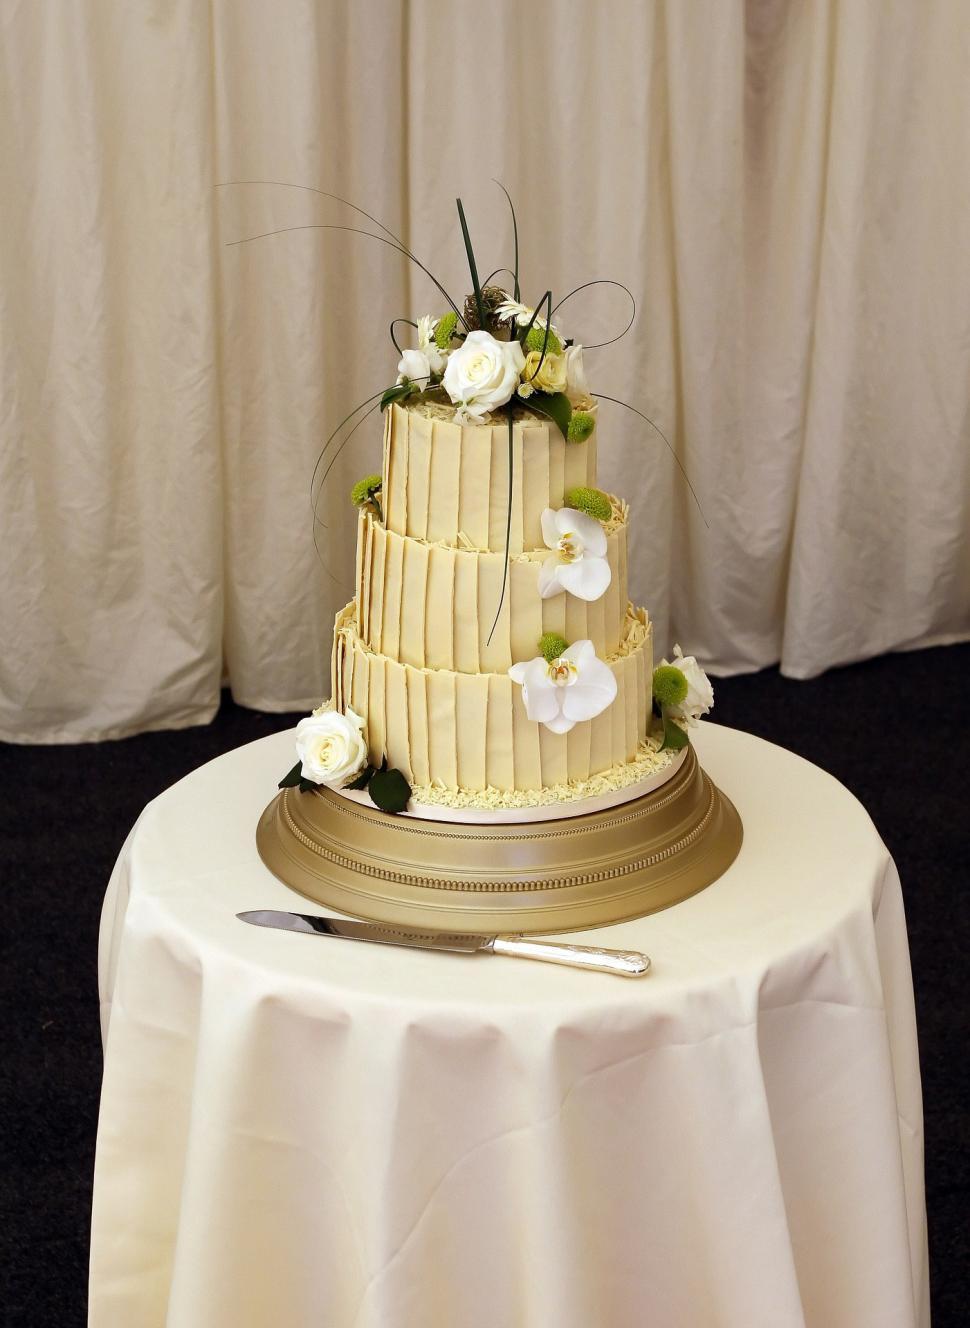 Free Image of Wedding Cake on Table 